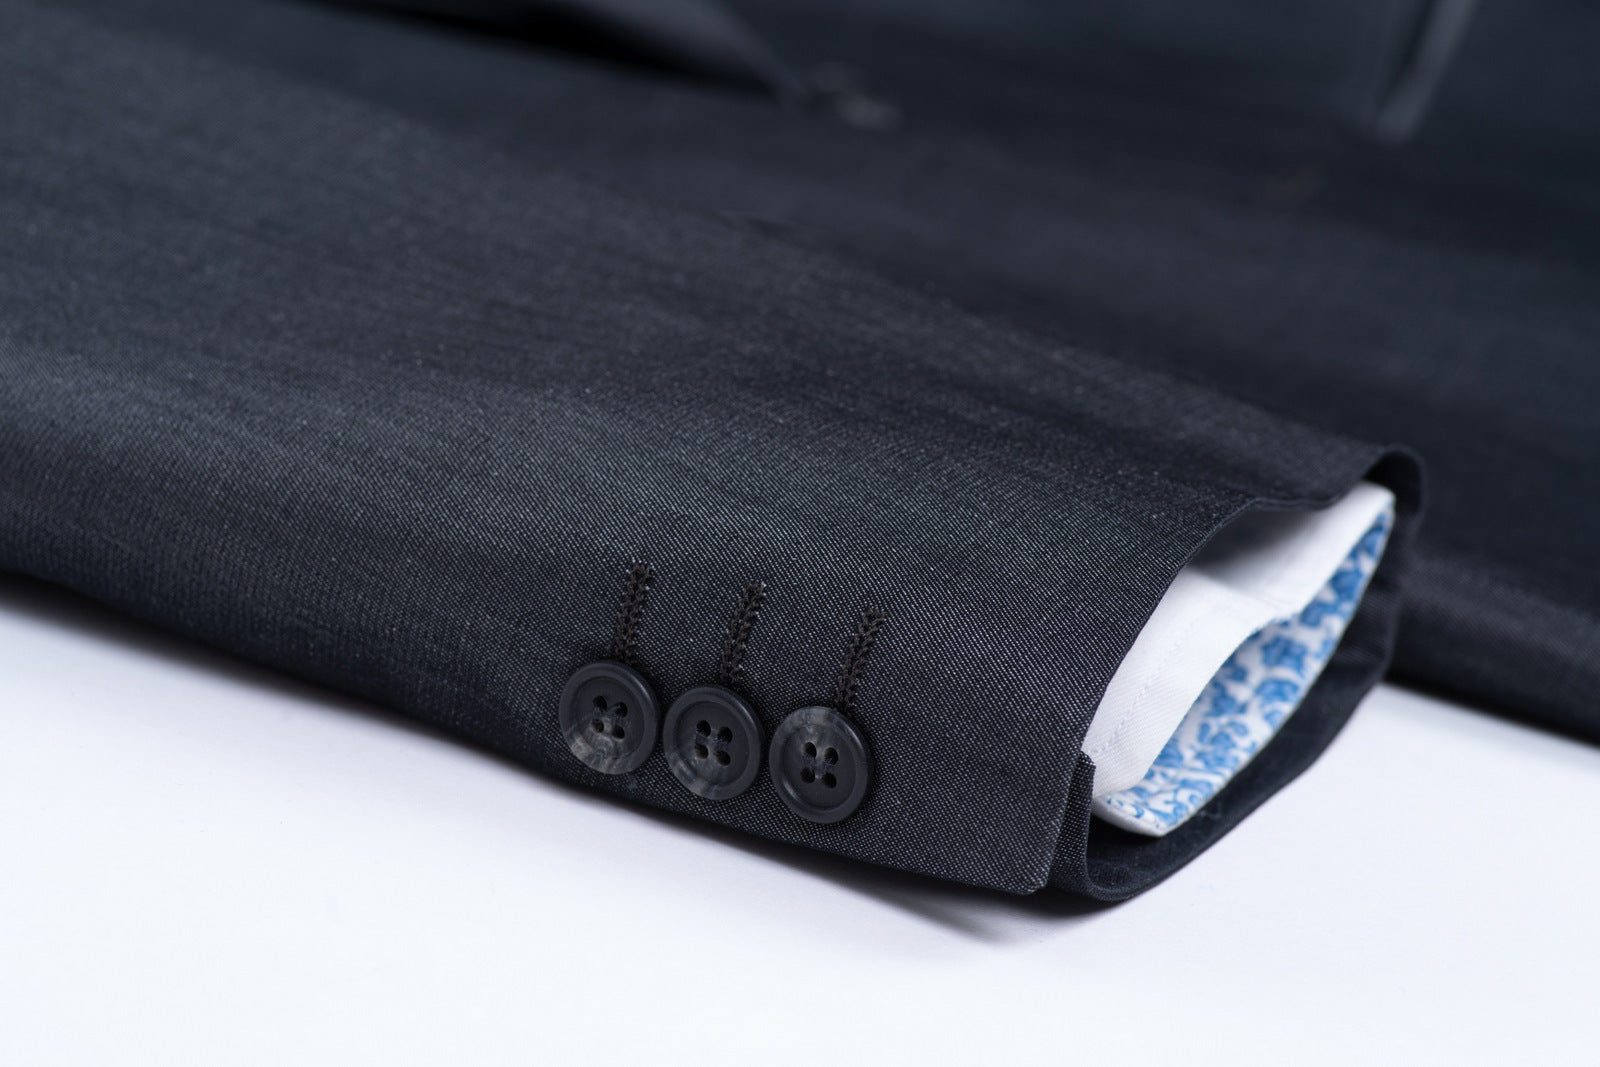 Valentino Single Breasted Grey Silk Blazer Jacket, US 40R, EU 50R